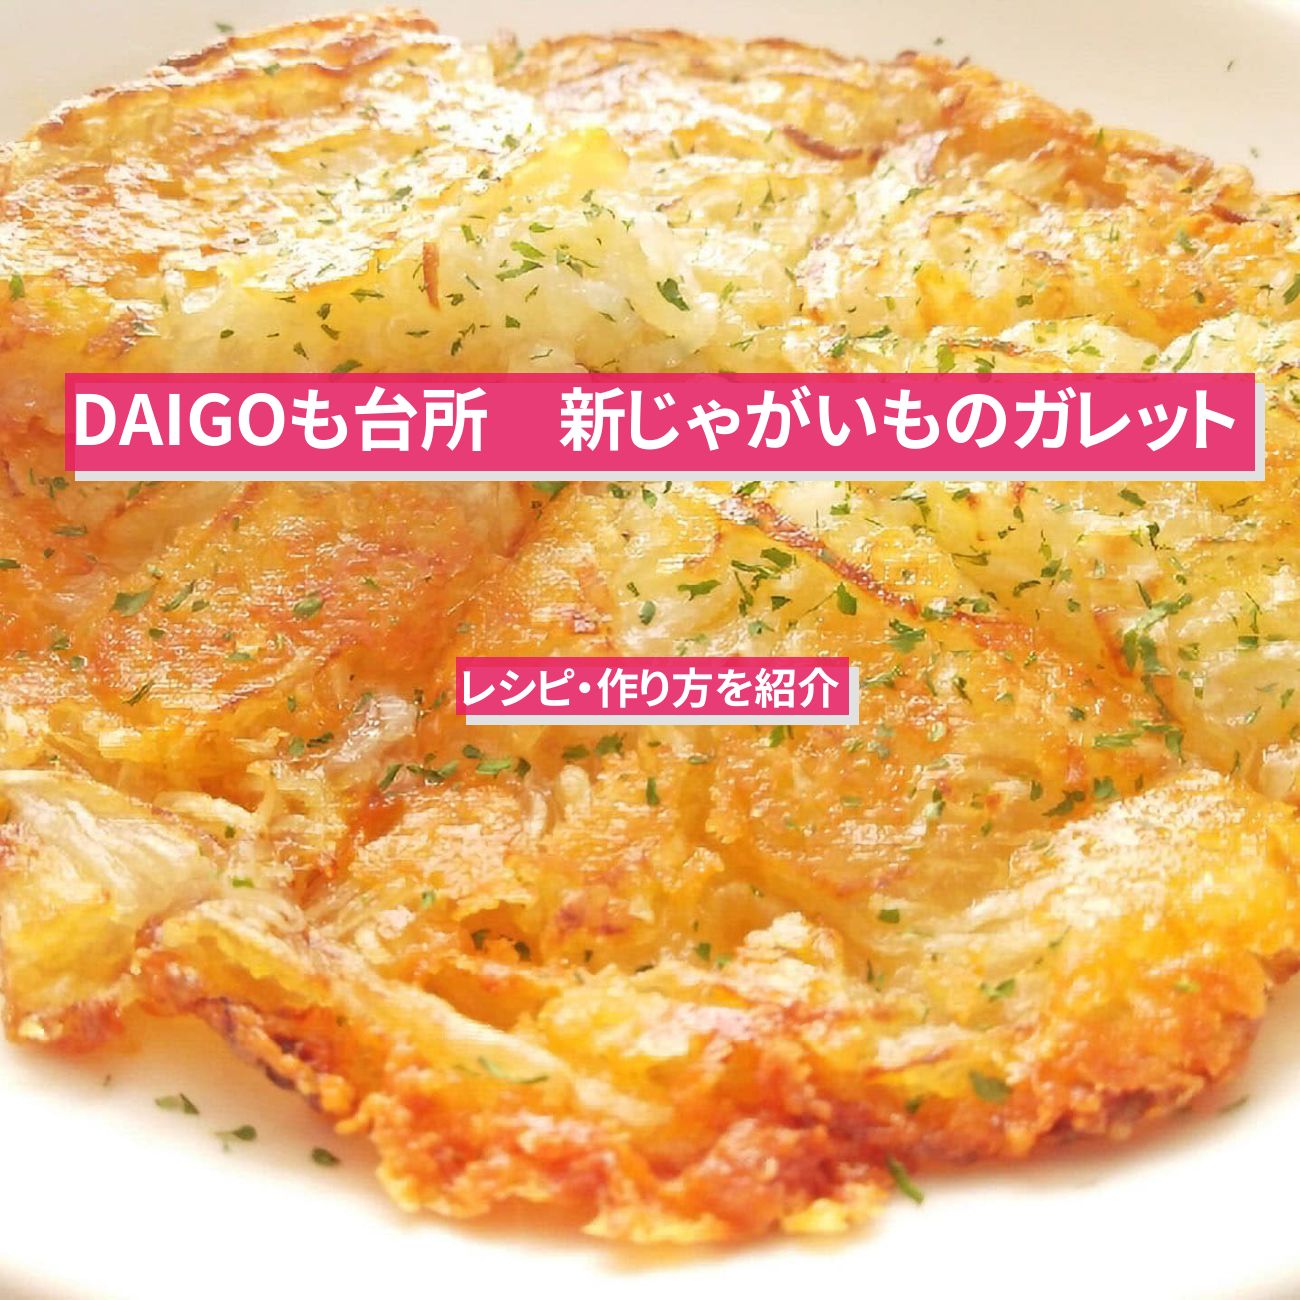 【DAIGOも台所】『新じゃがいものガレット』のレシピ・作り方を紹介〔ダイゴも台所〕